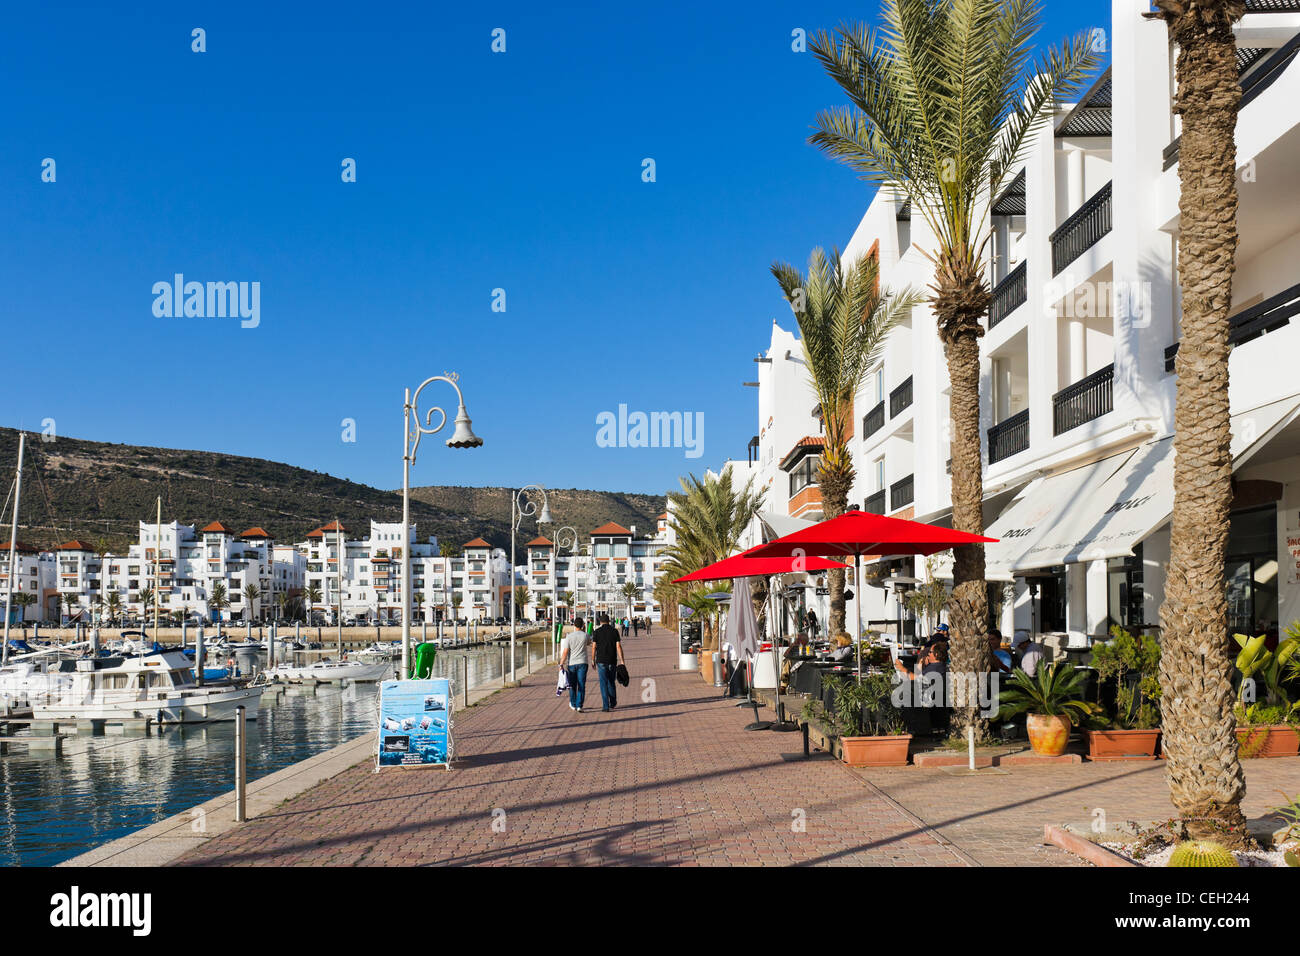 Bürgersteig-Restaurant in Agadir Marina, Agadir, Marokko, Nordafrika  Stockfotografie - Alamy